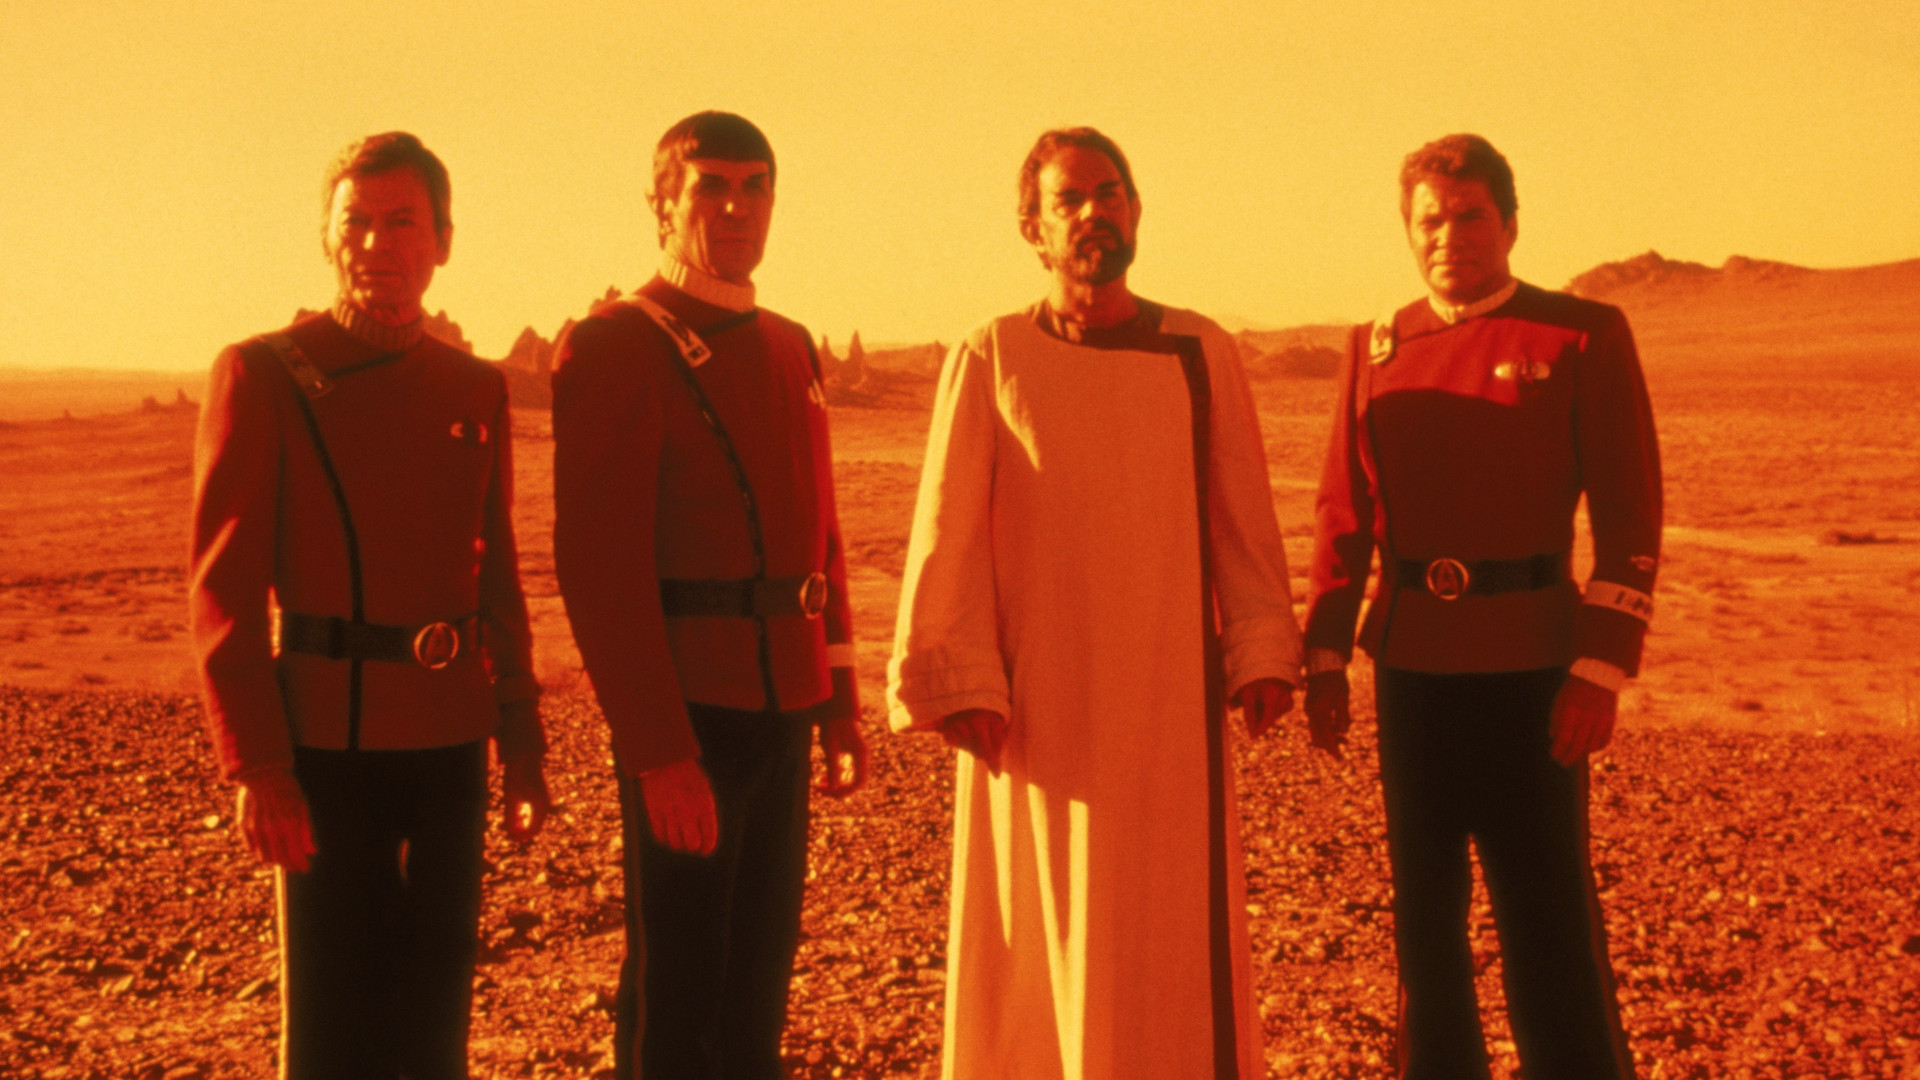 Leonard Nimoy, William Shatner, DeForest Kelley, and Laurence Luckinbill in Star Trek V The Final Frontier (1989)